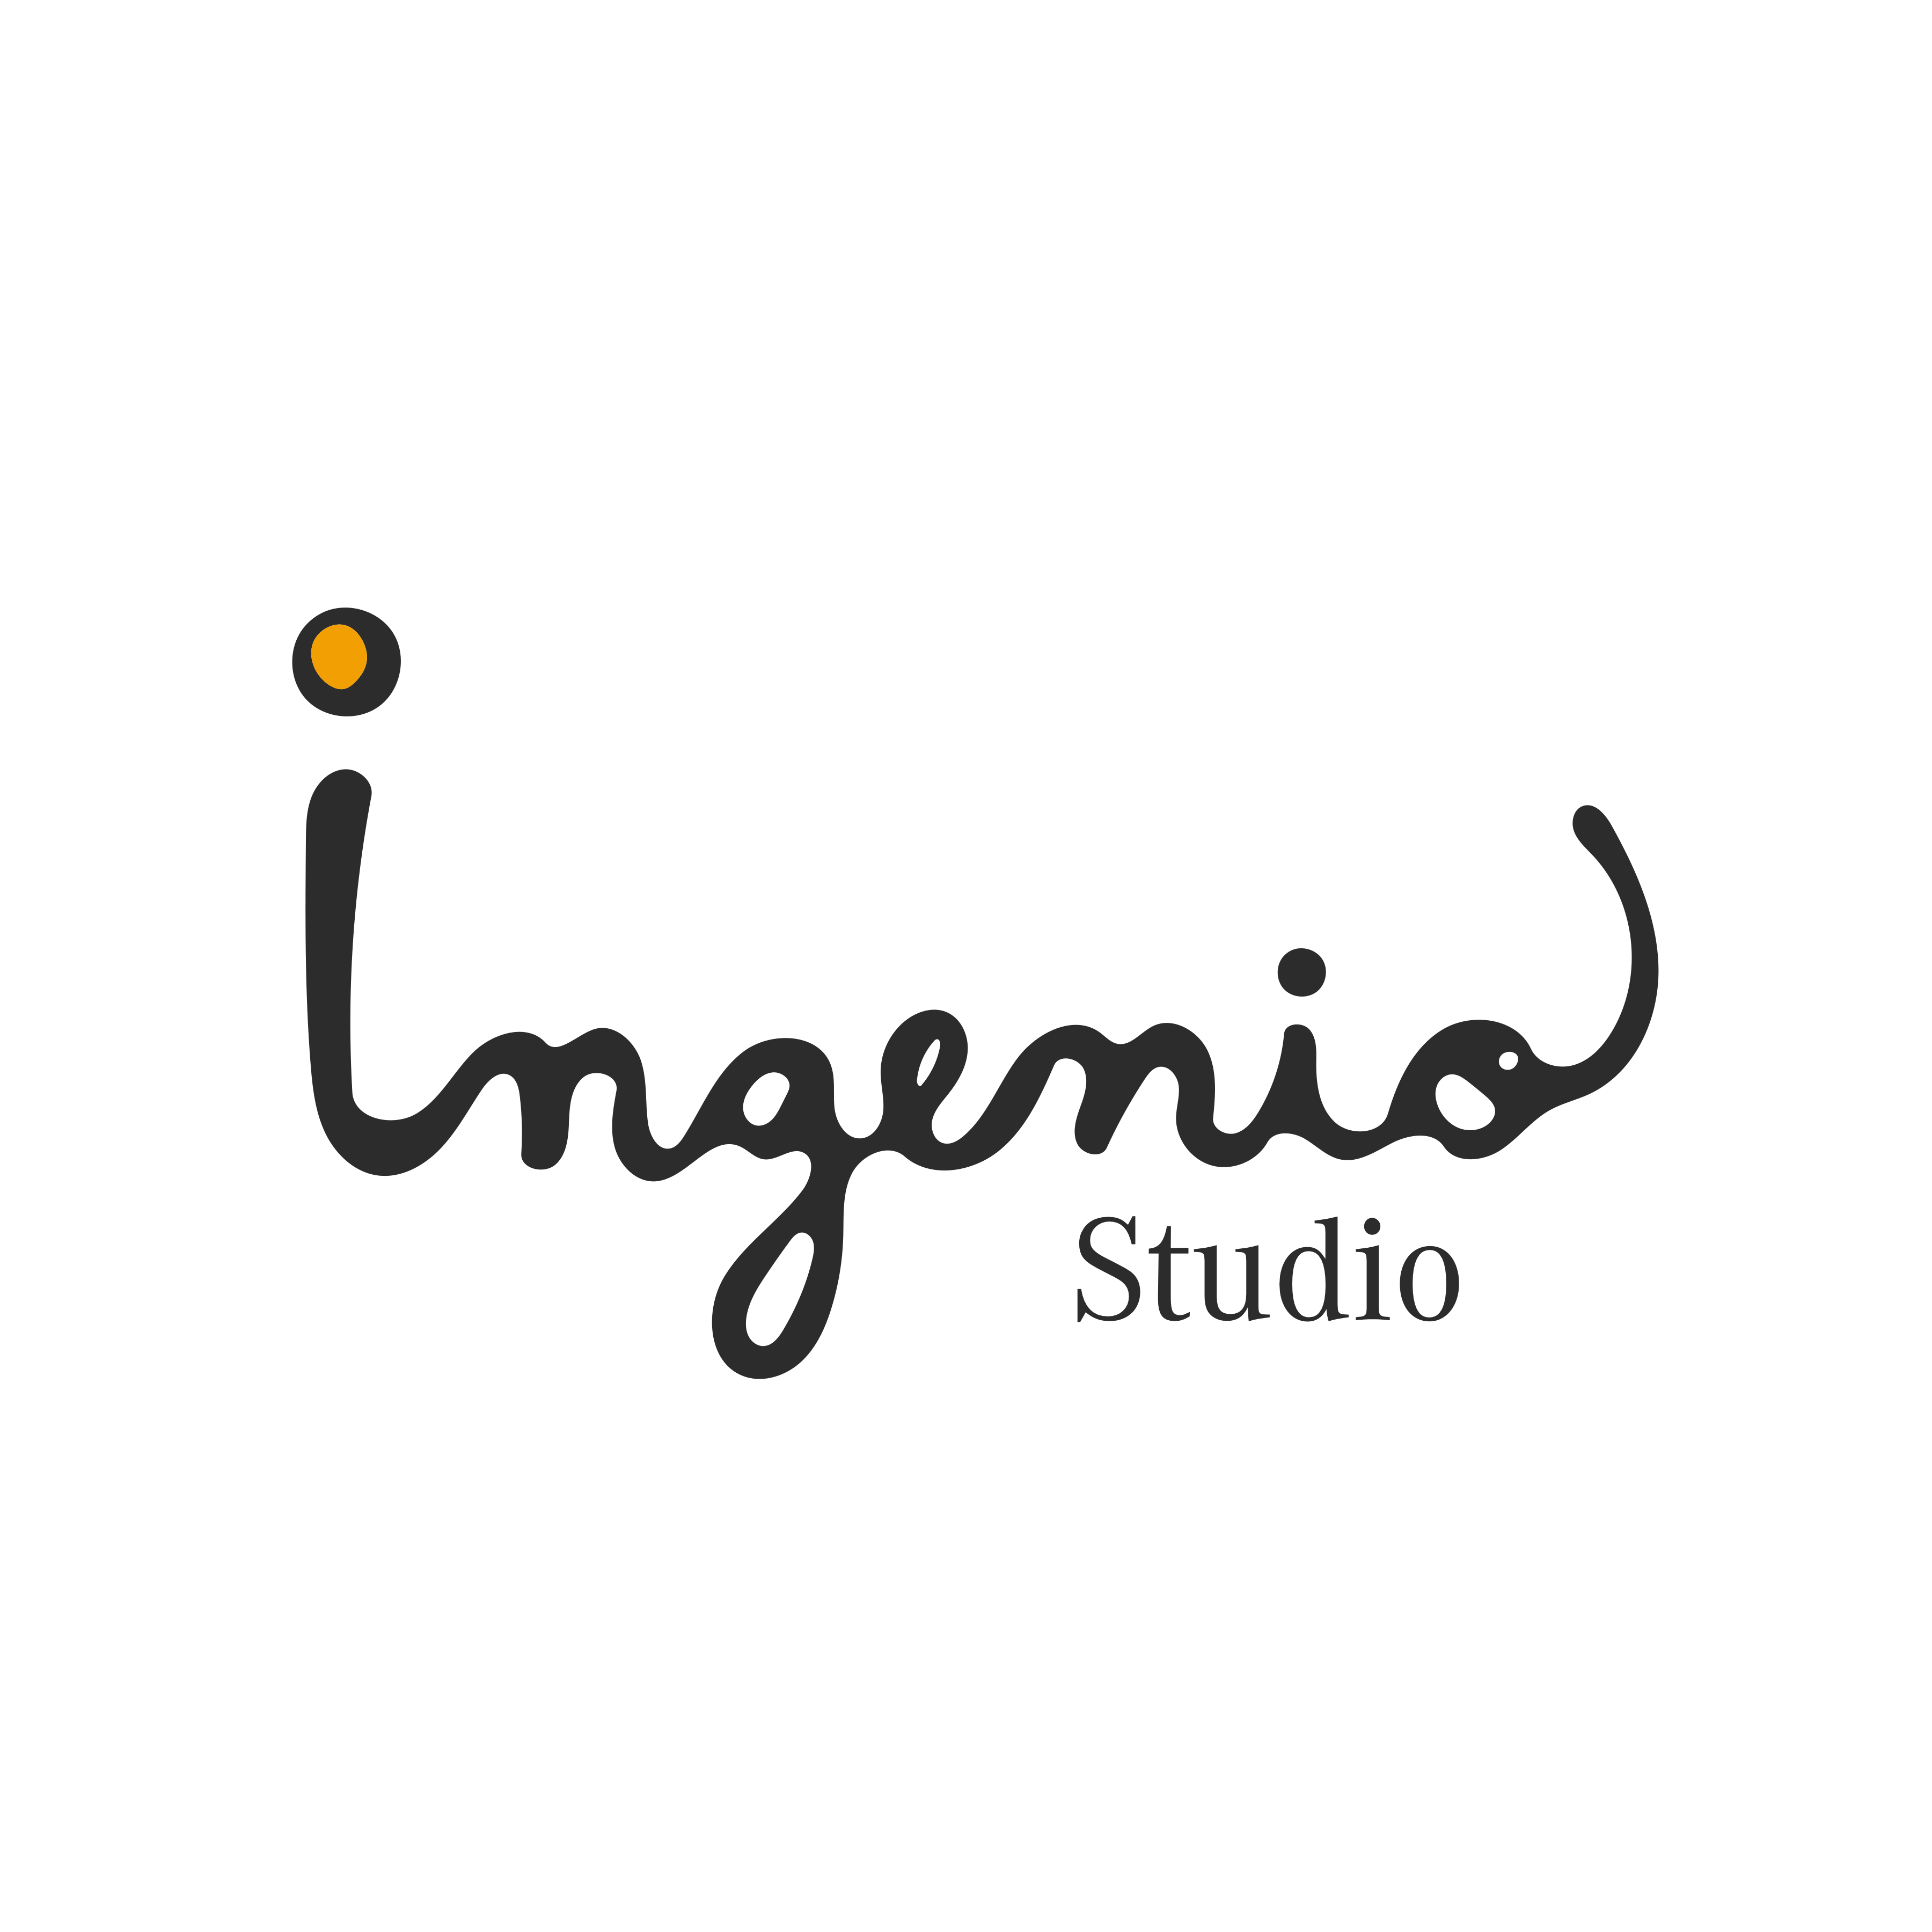 Ingenio Studio